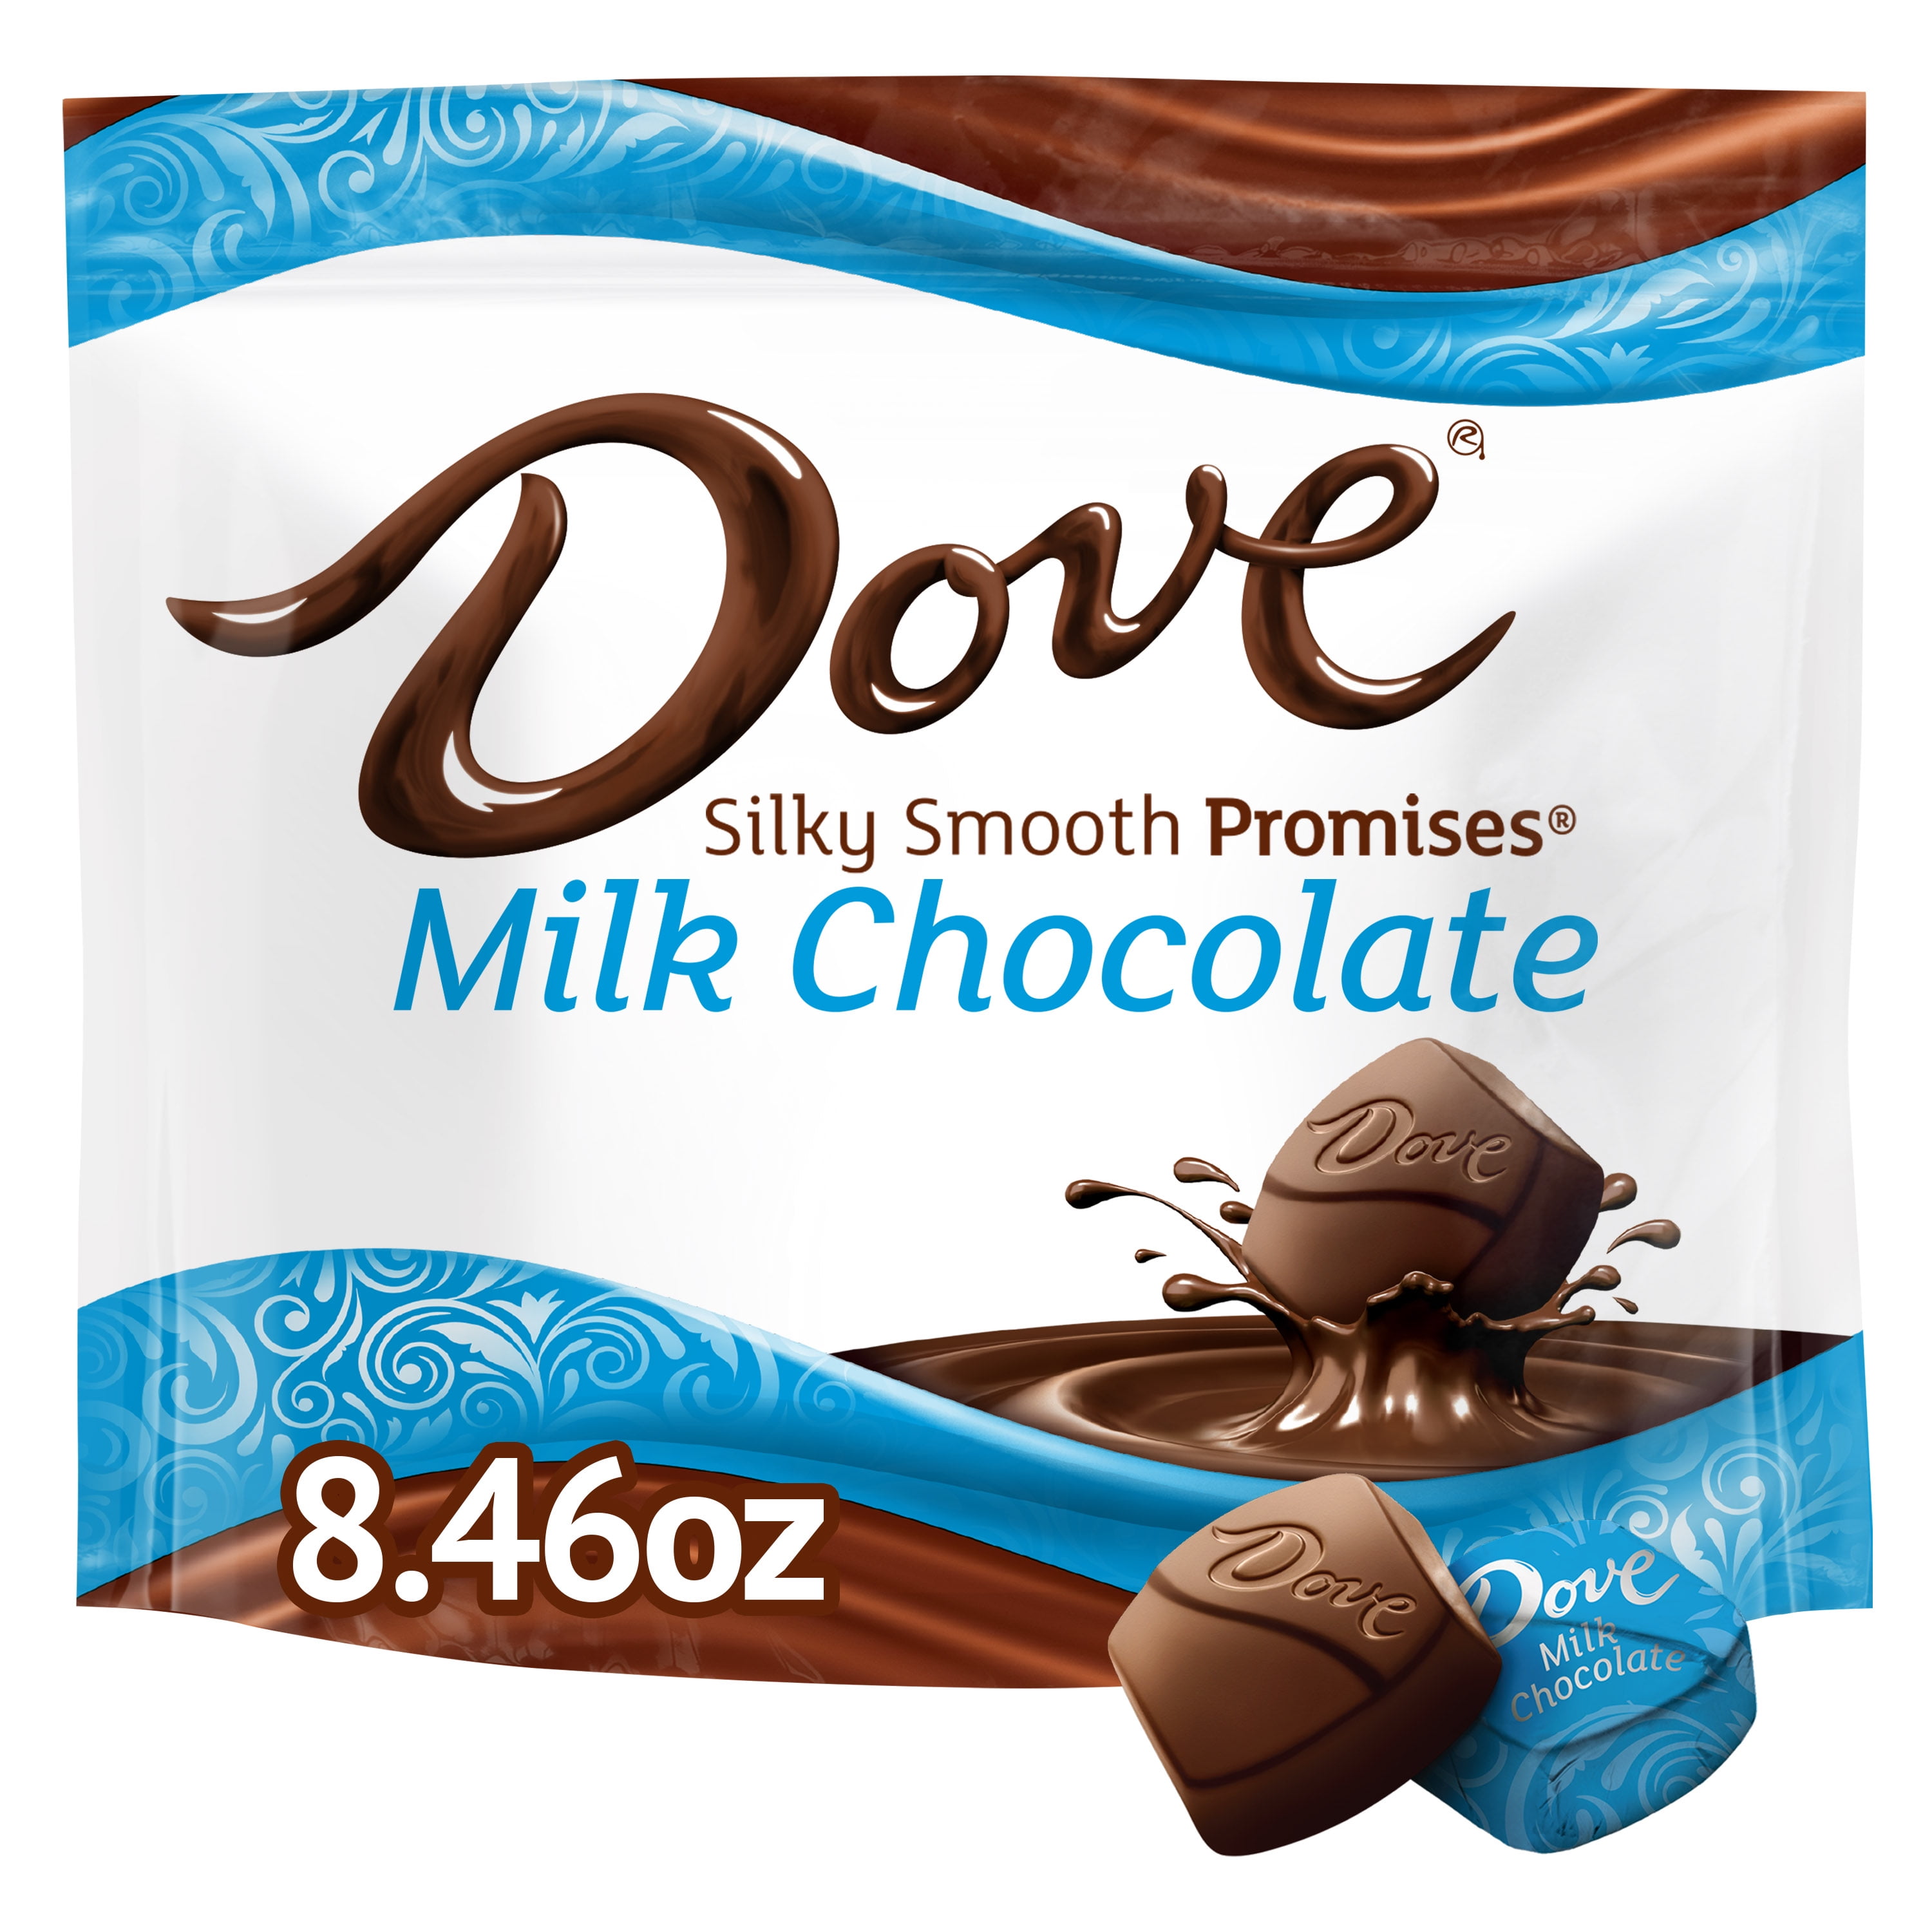 Dove Promises Milk Chocolate Candy - 8.46 oz Bag